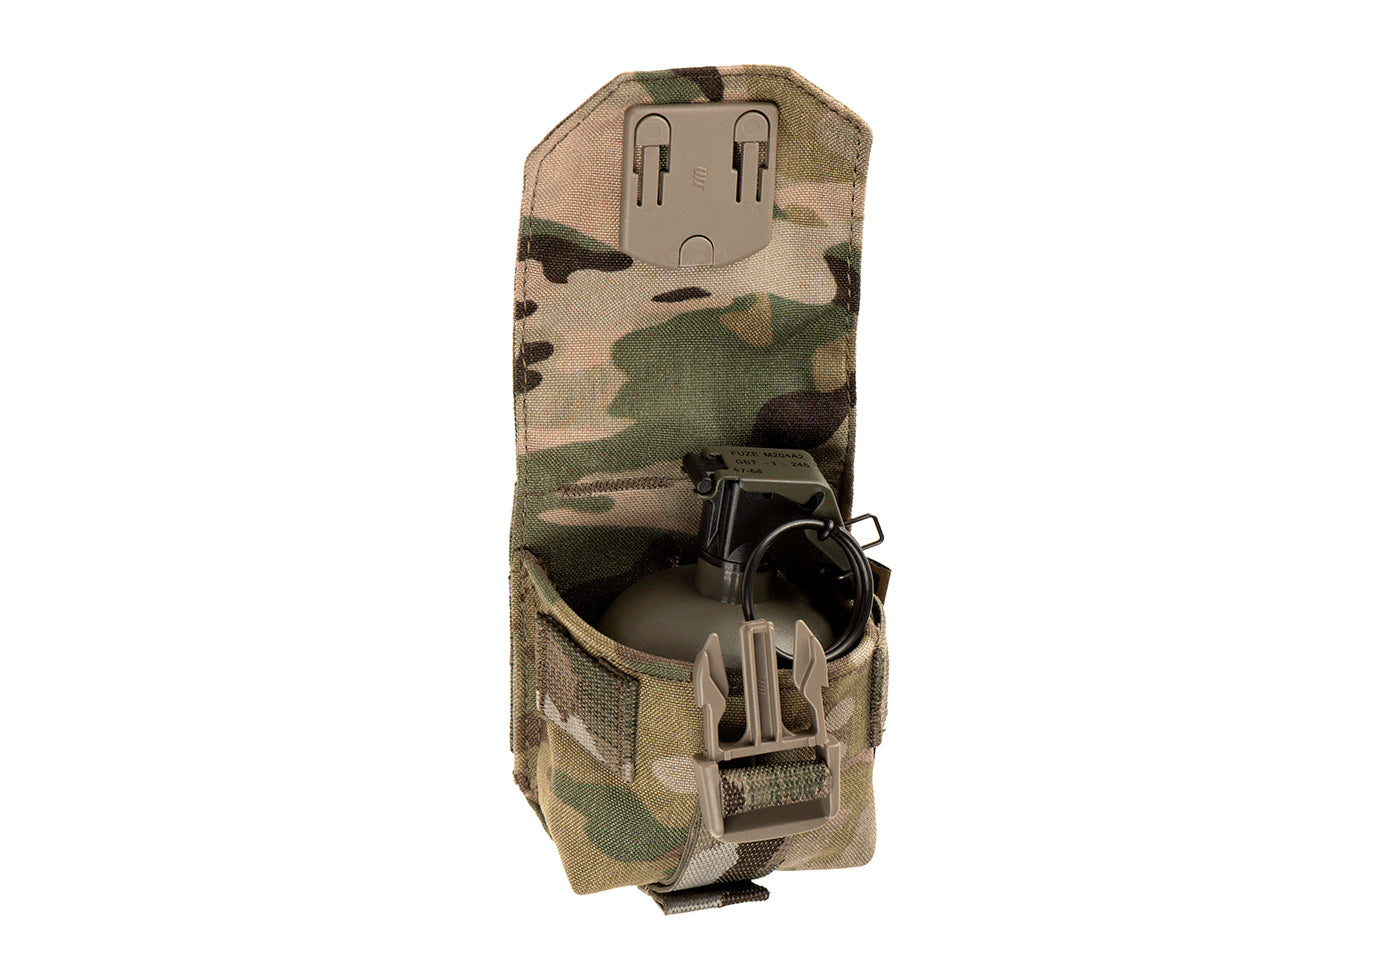 Clawgear - Frag Grenade Pouch - Multicam